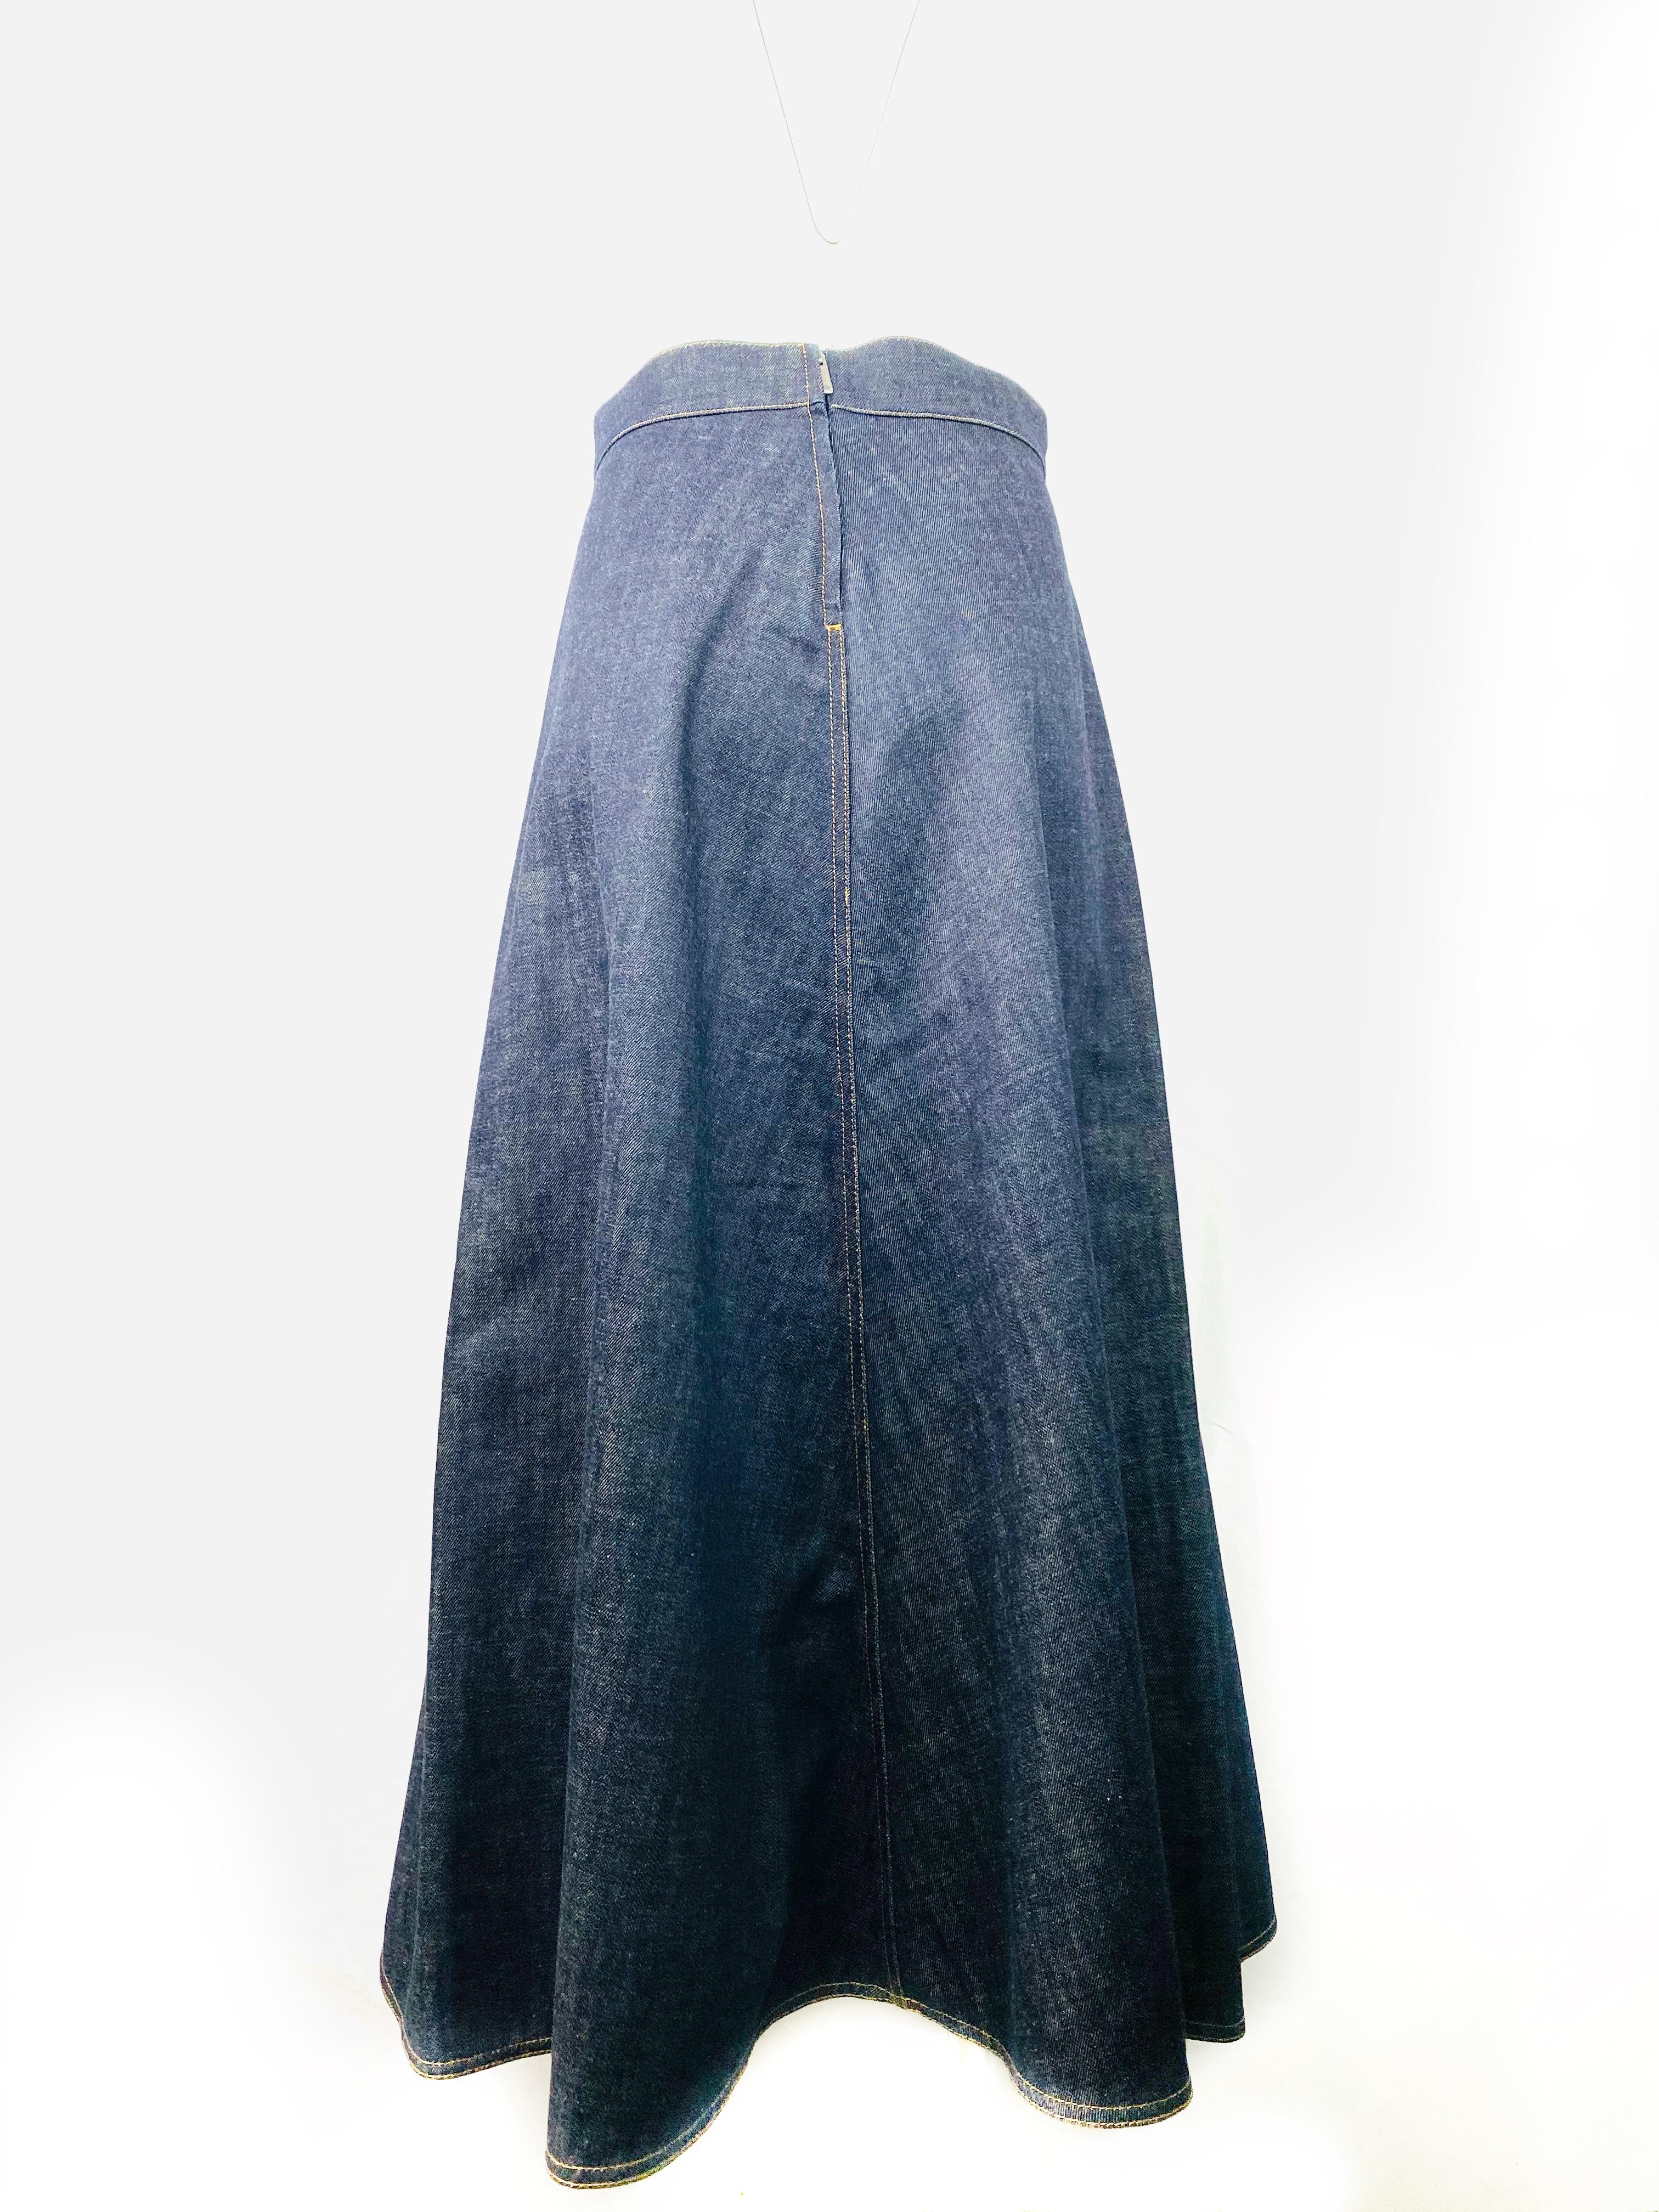 Black Christian Dior Denim Maxi Skirt Size 38